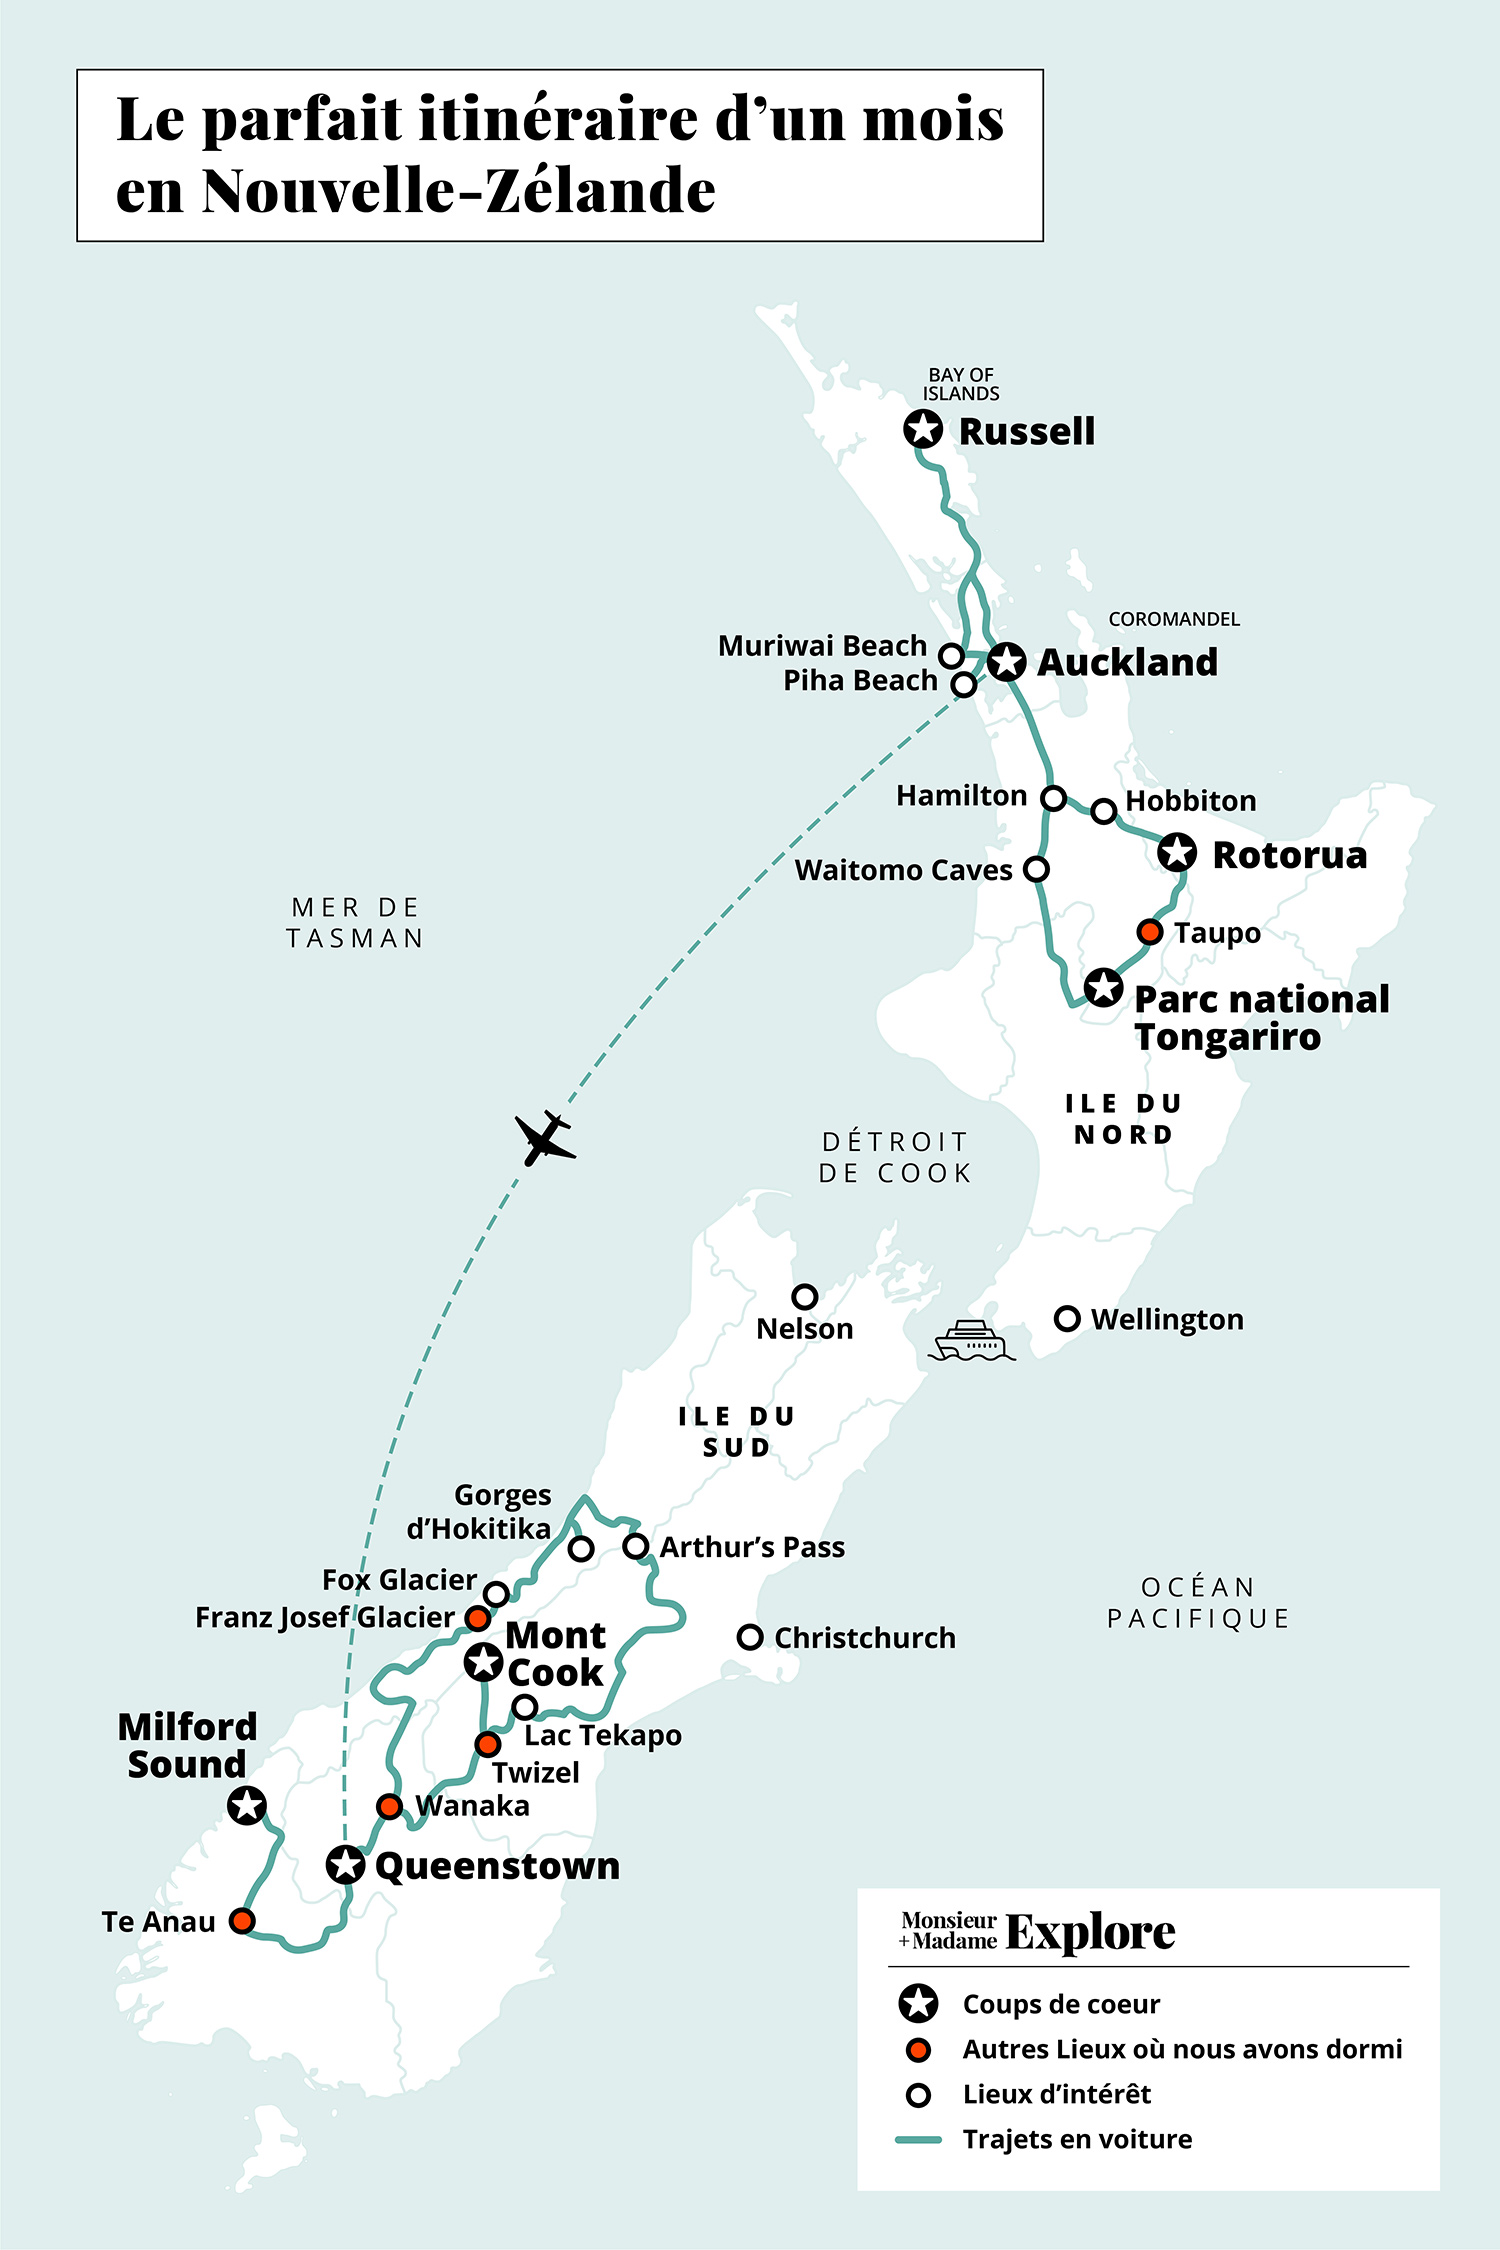 Carte et itinéraire en Nouvelle-Zélande / Map and itinerary in New Zealand